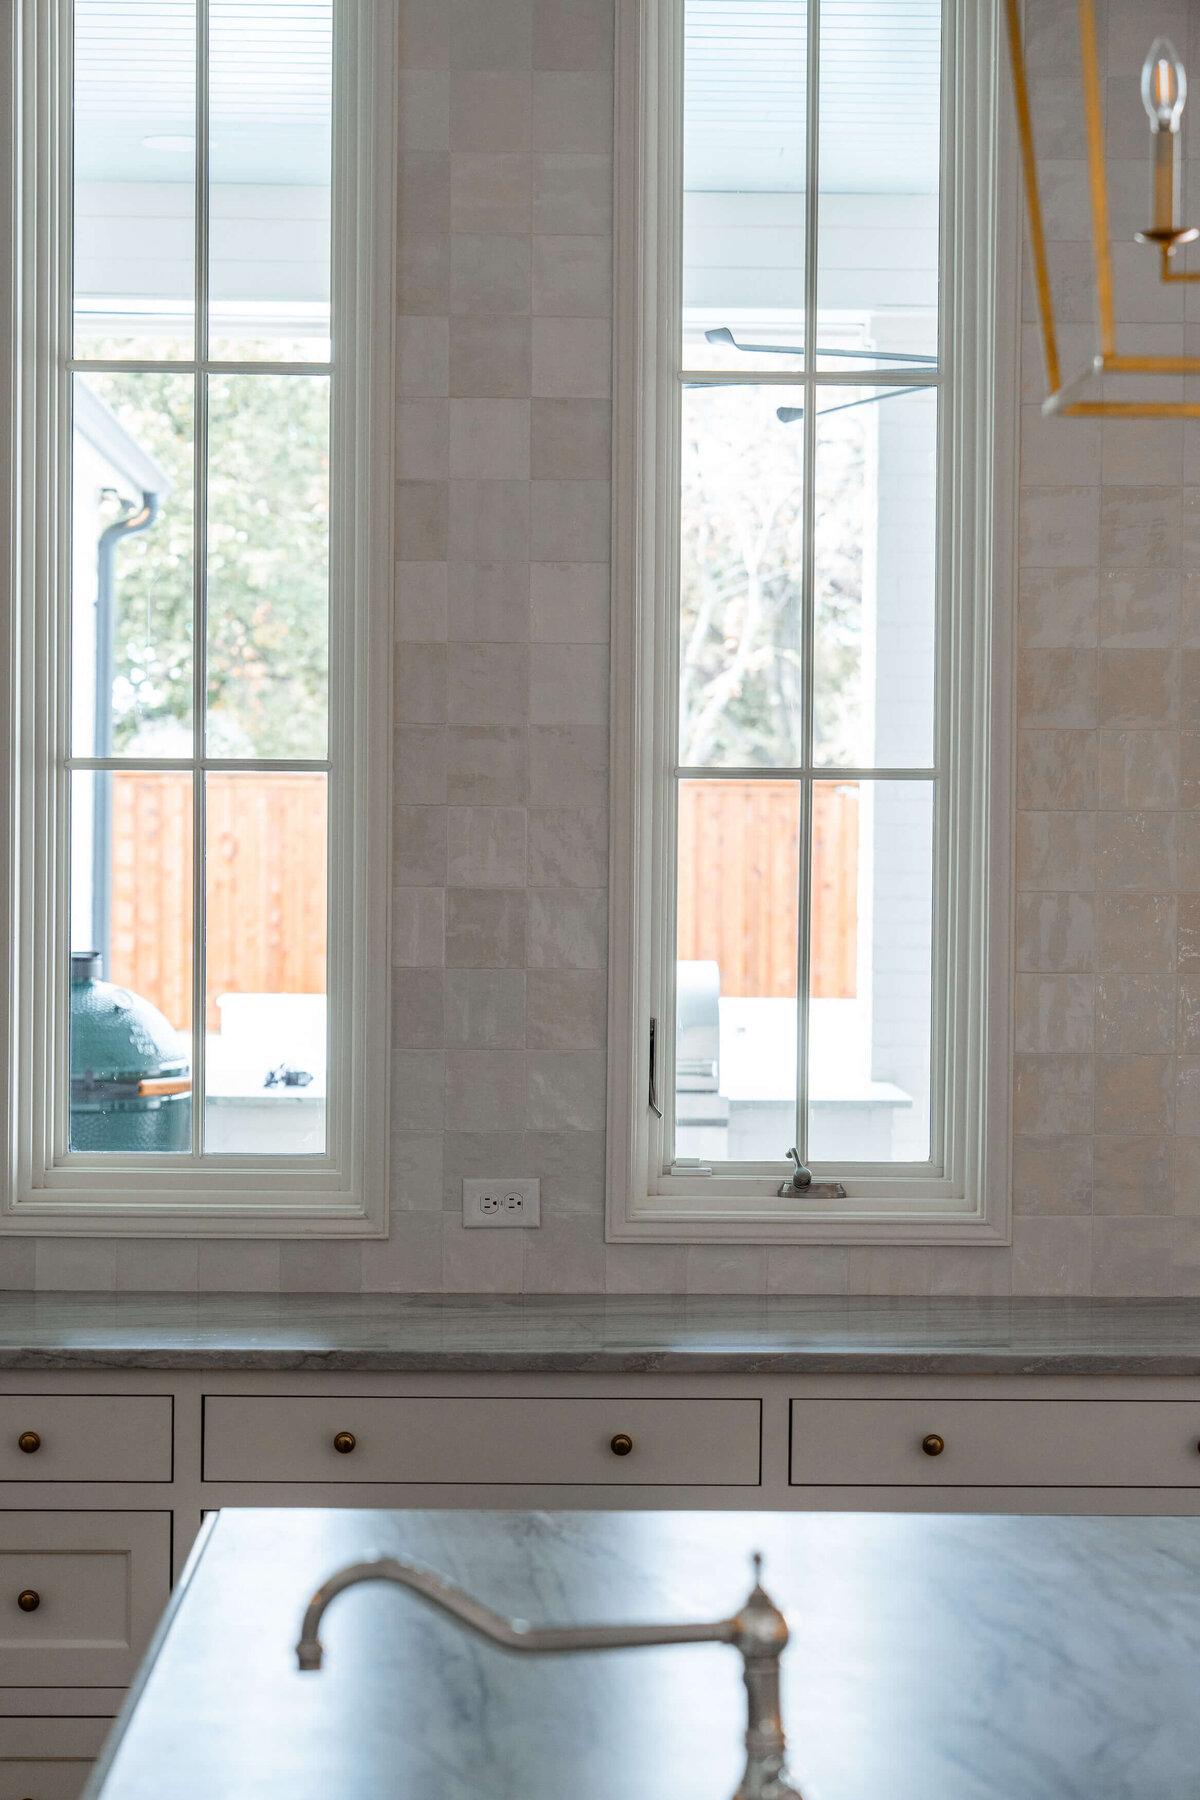 Kitchen window details in high-end custom home